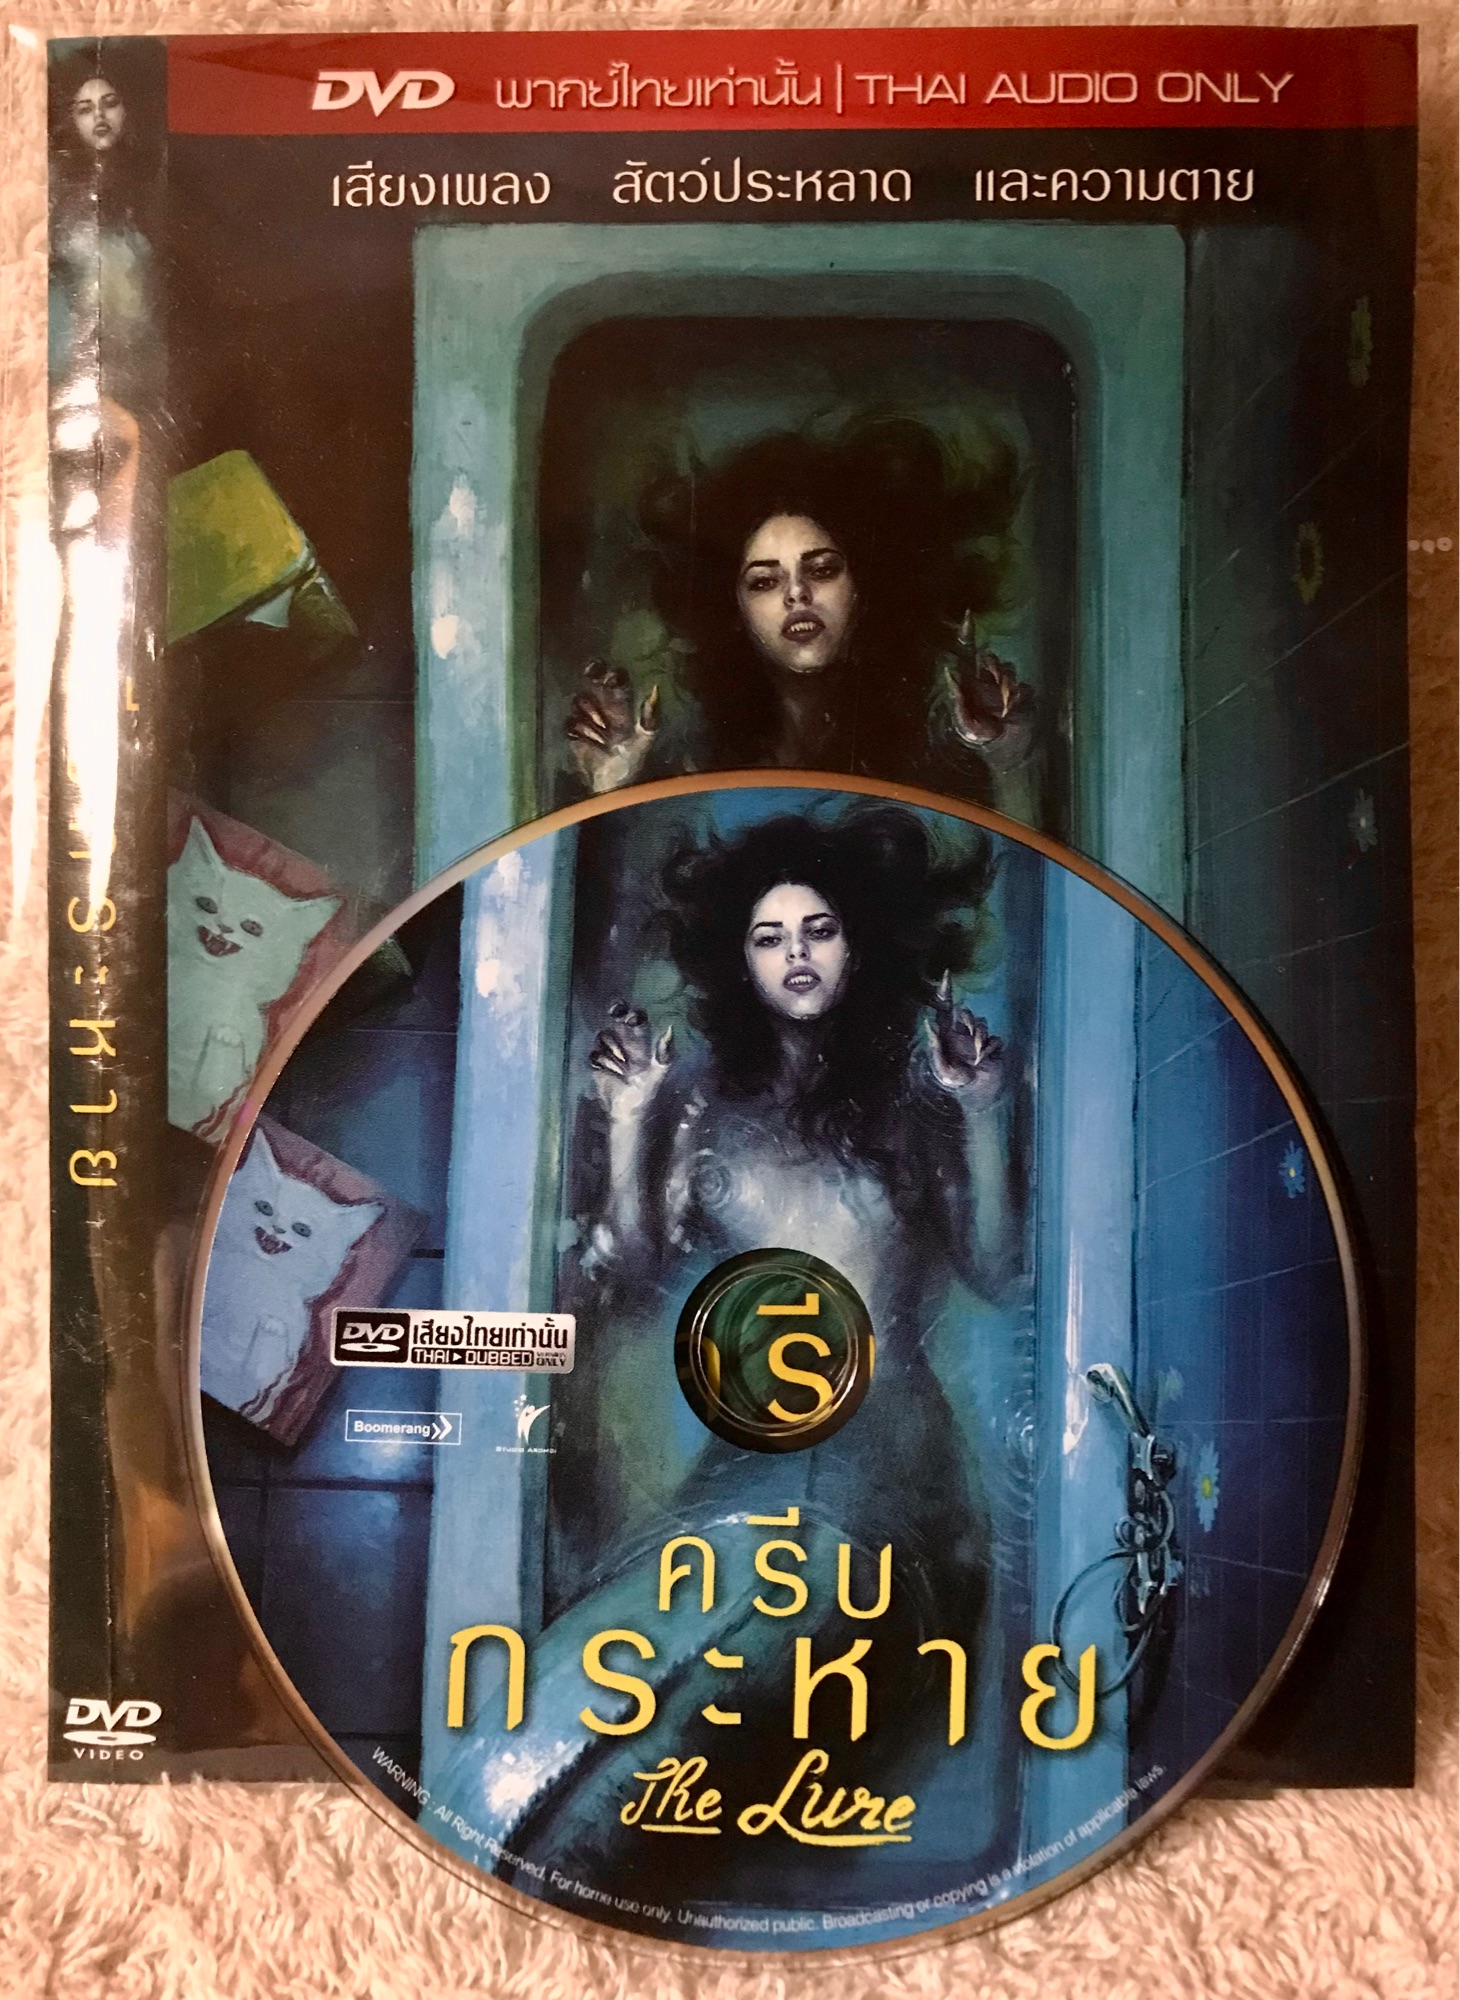 DVD Master : THE LURE ครีบกระหาย พากษ์ไทย หนังสยองขวัญ ระทึกขวัญ  เอาชีวิตรอด